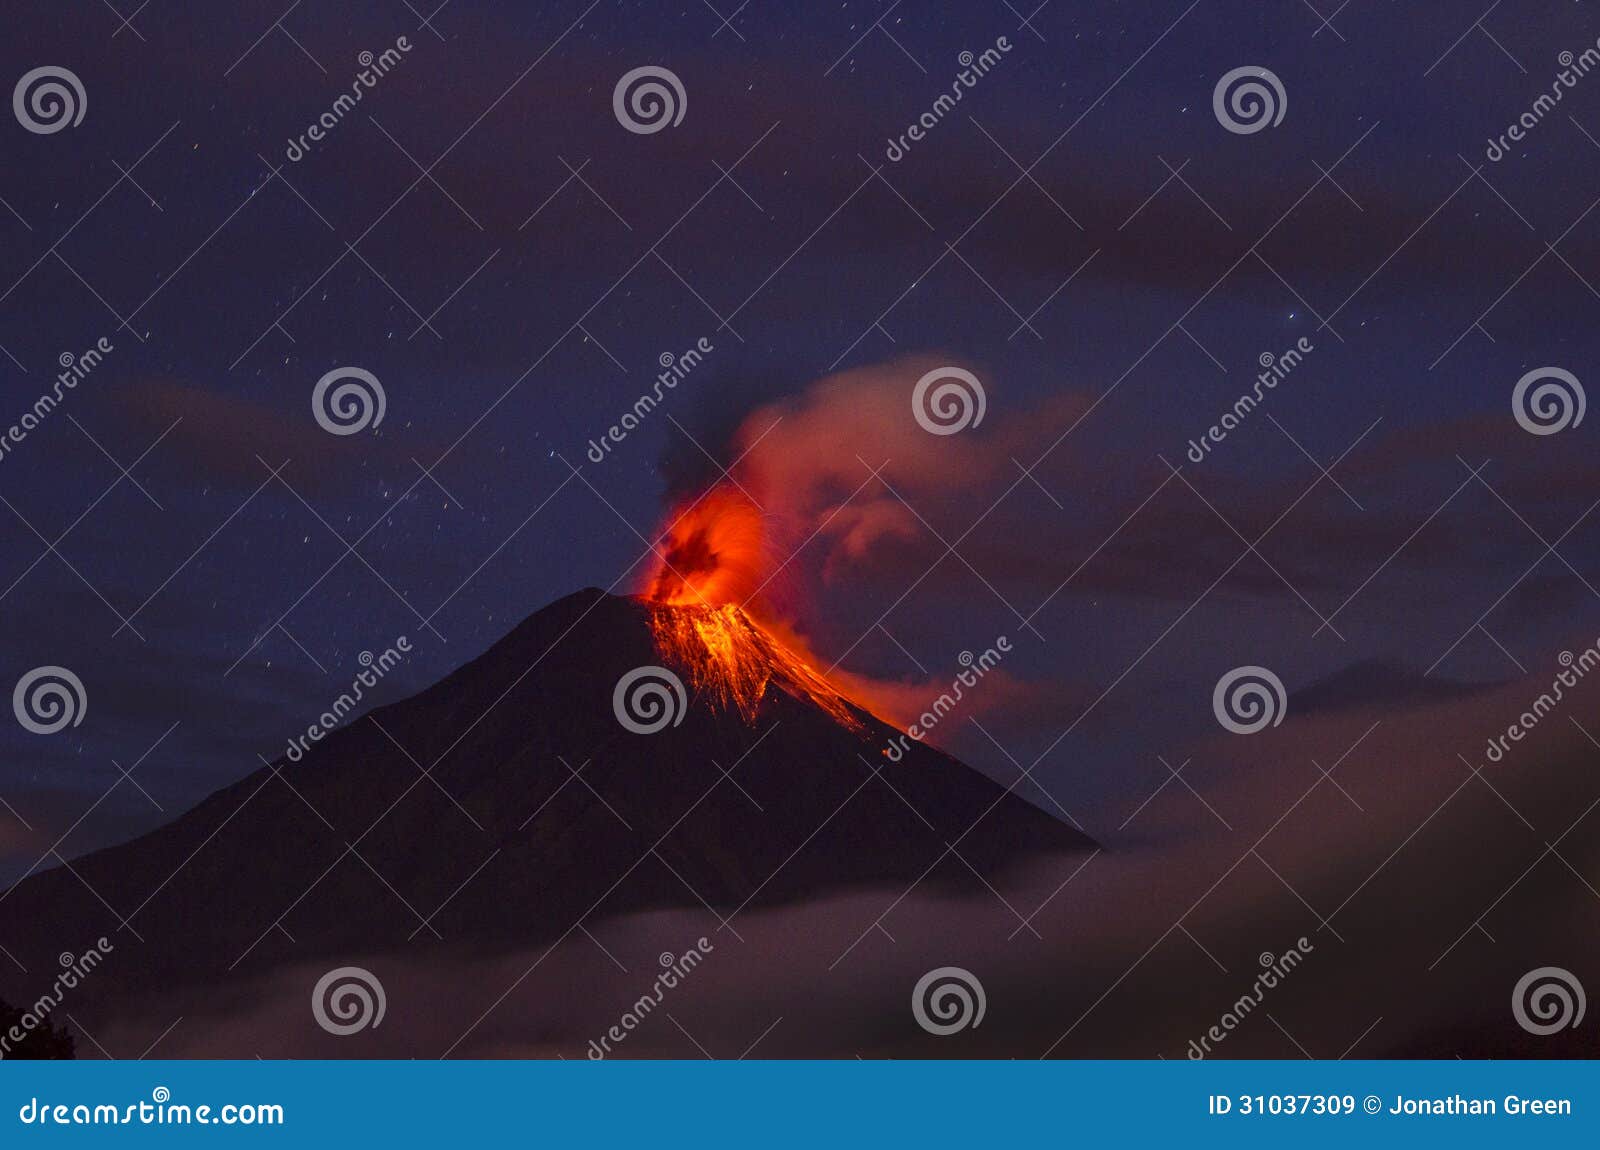 tungurahua volcano erupting, ecuador